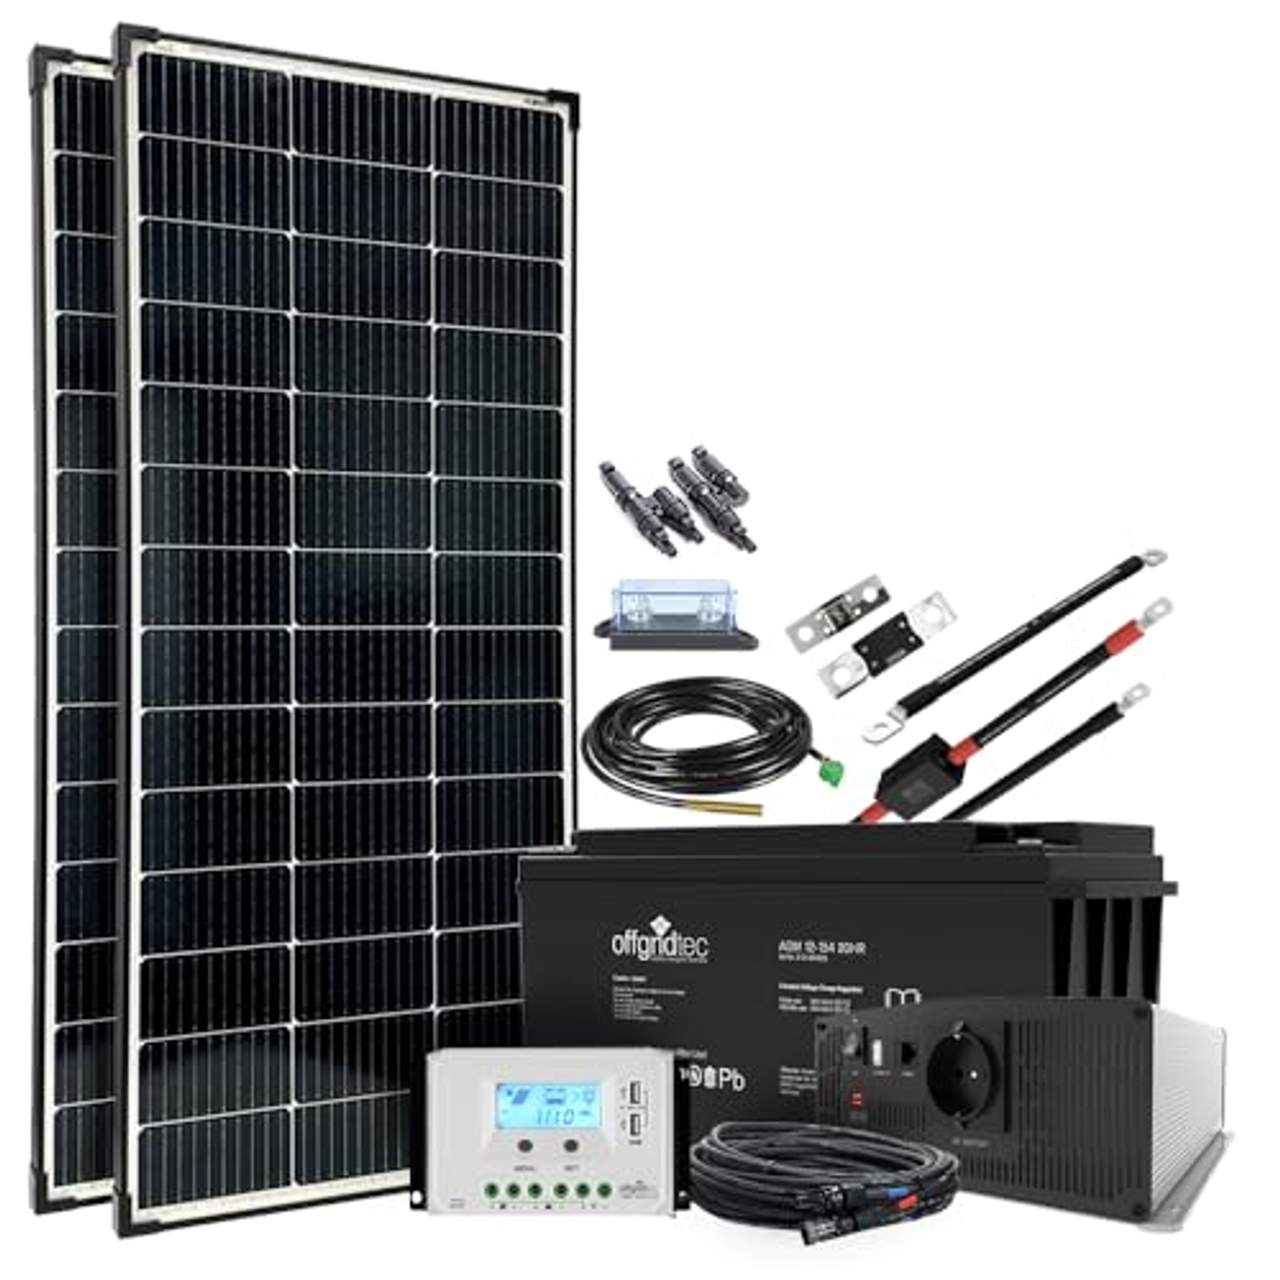 Offgridtec Autark XL-Master 300W Solar